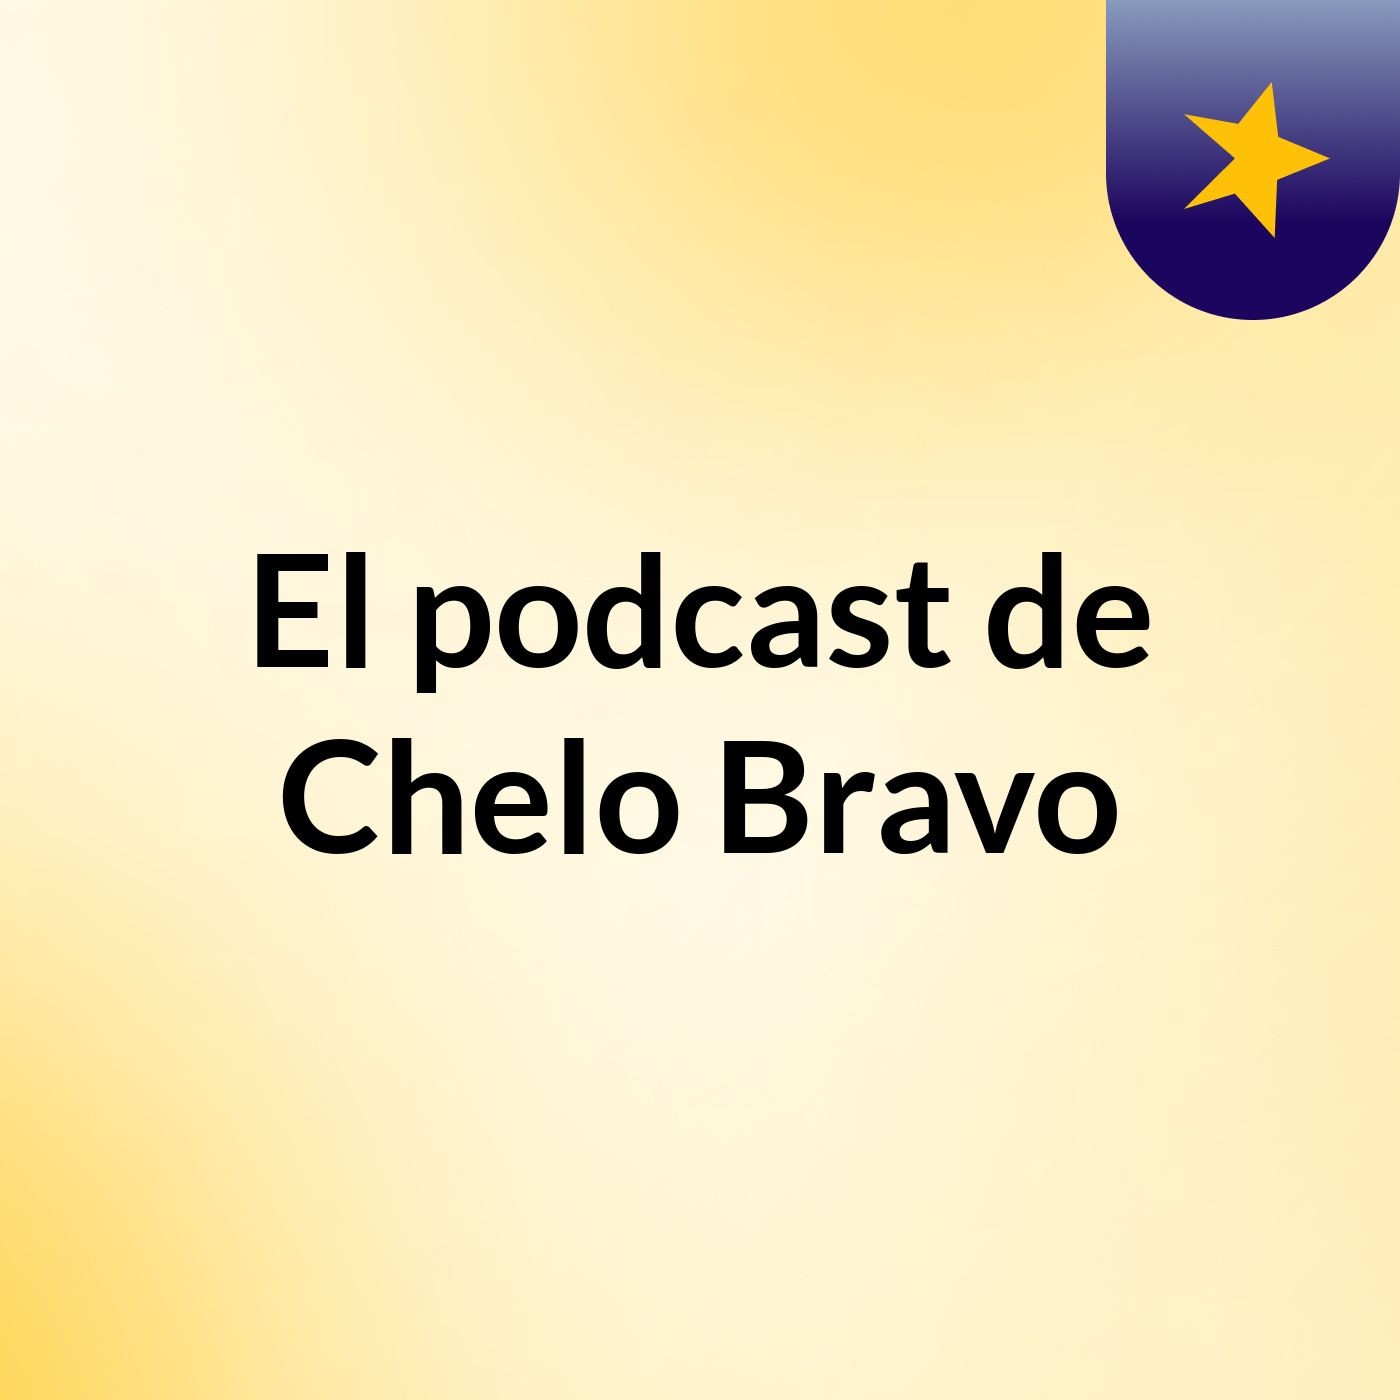 El podcast de Chelo Bravo